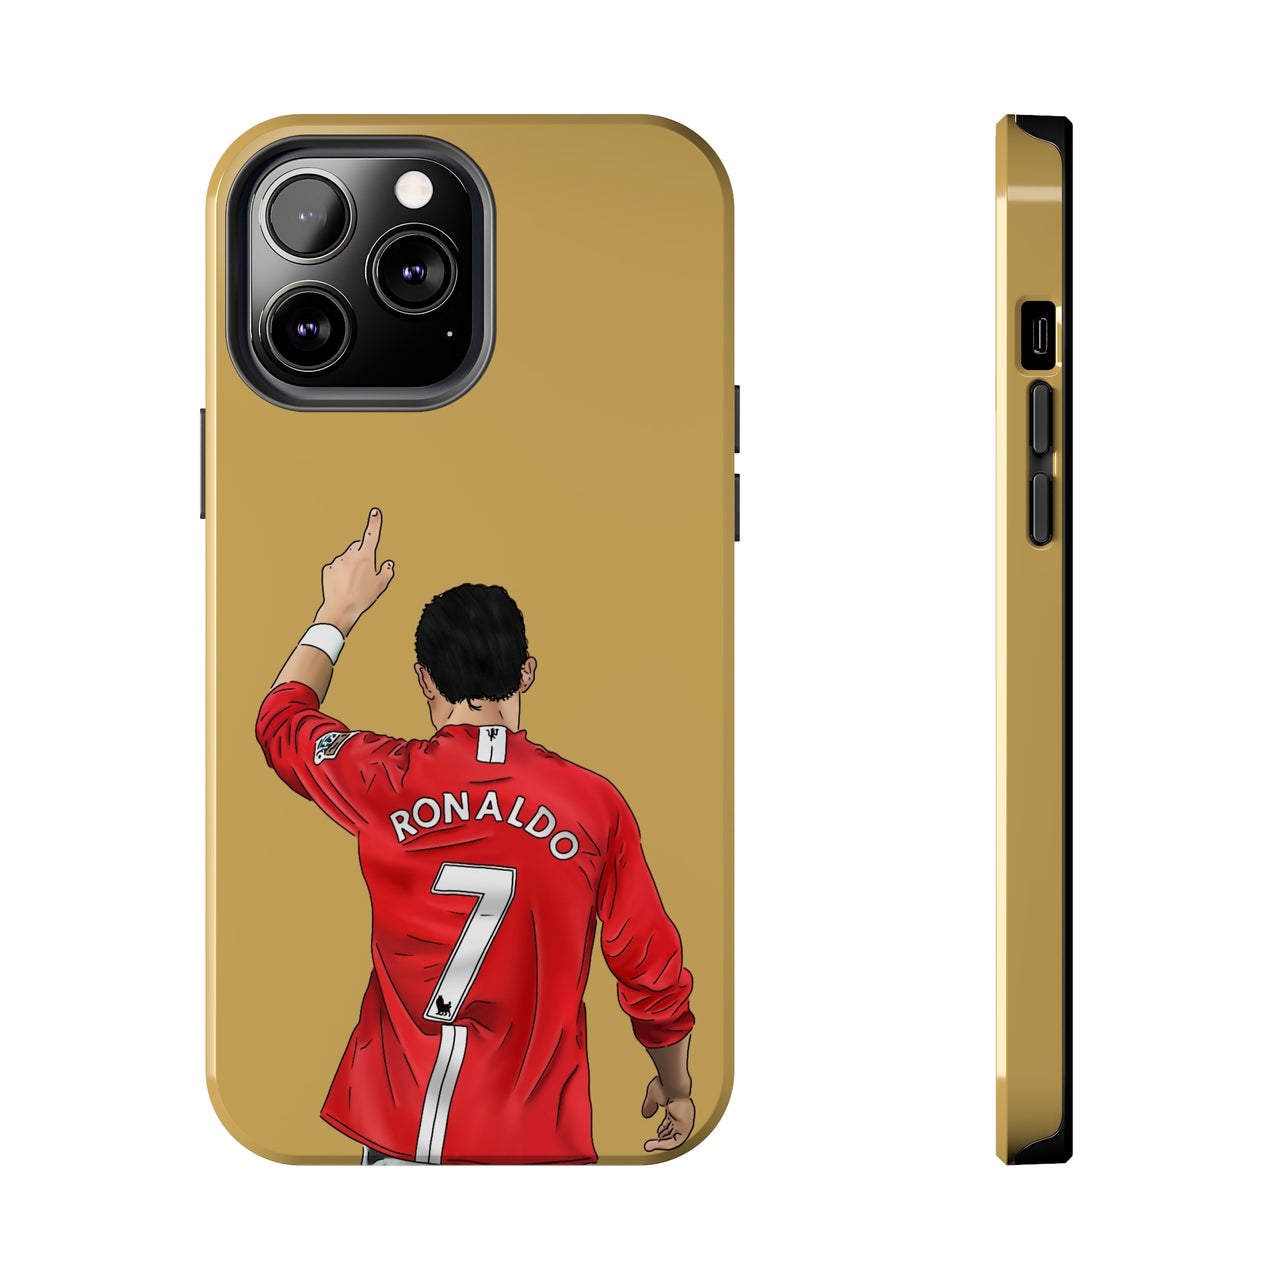 Cristiano Ronaldo Tough Phone Cases